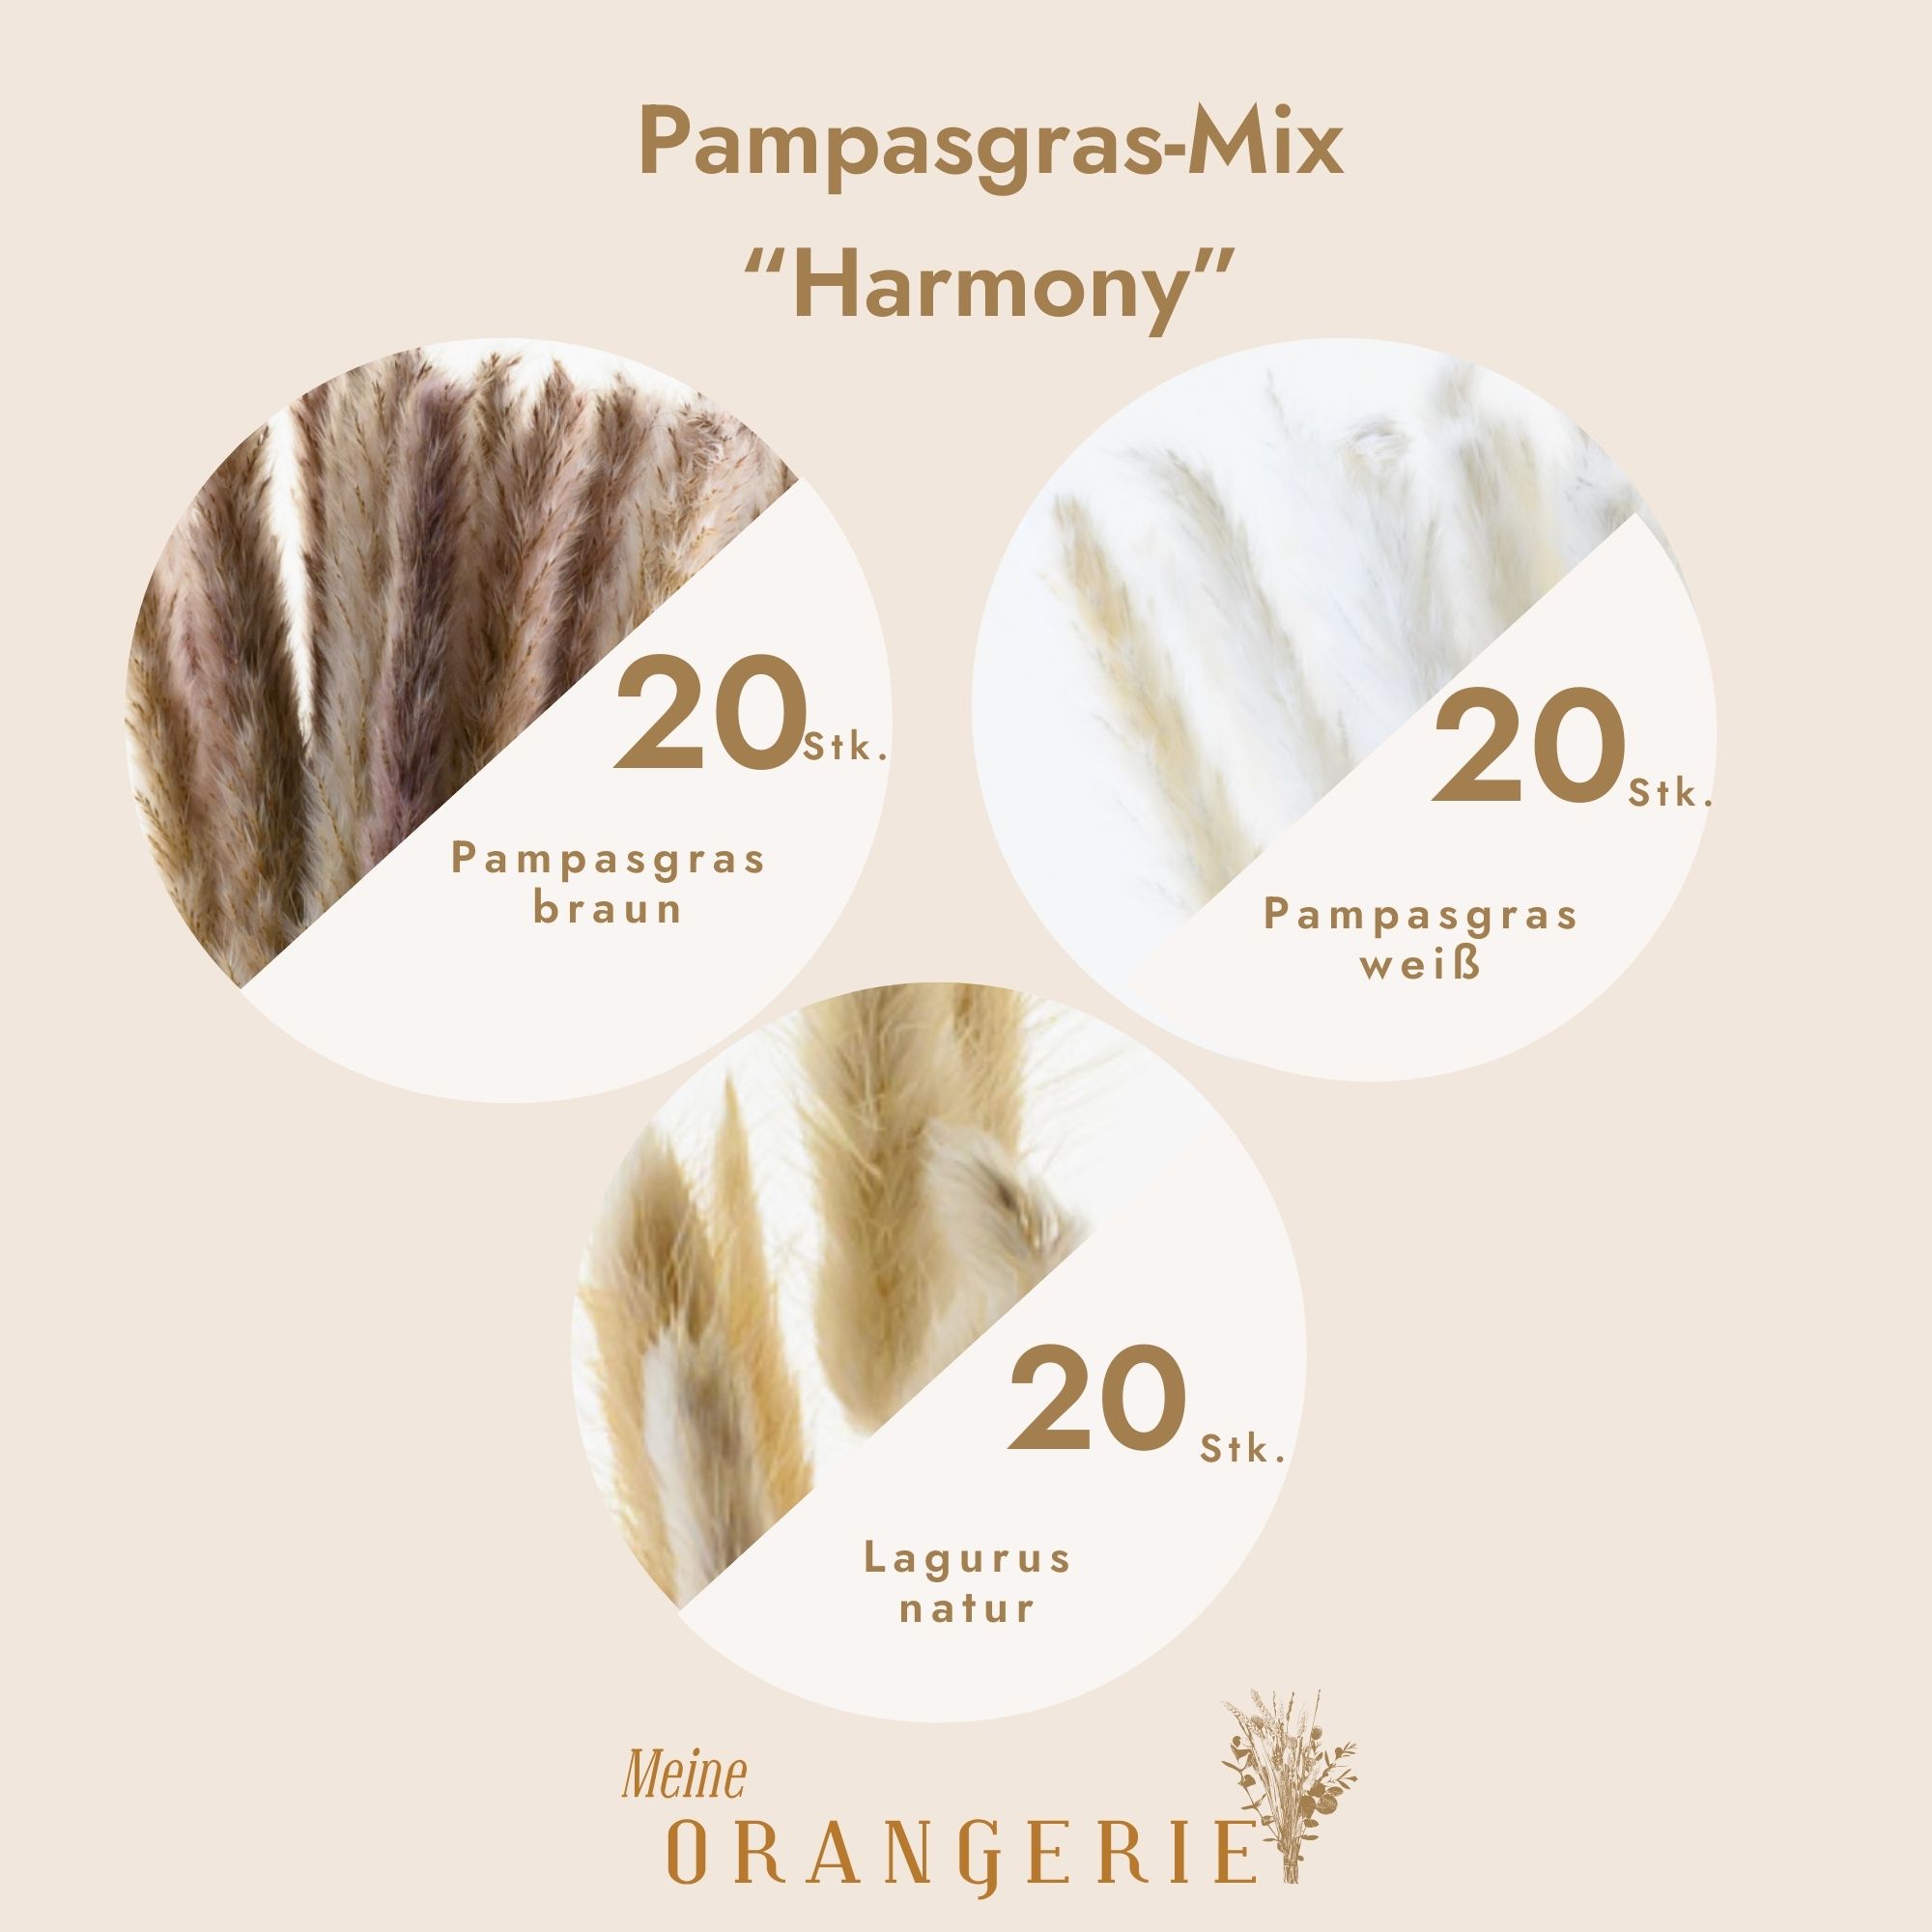 Pampasgras-Mix "Harmony"